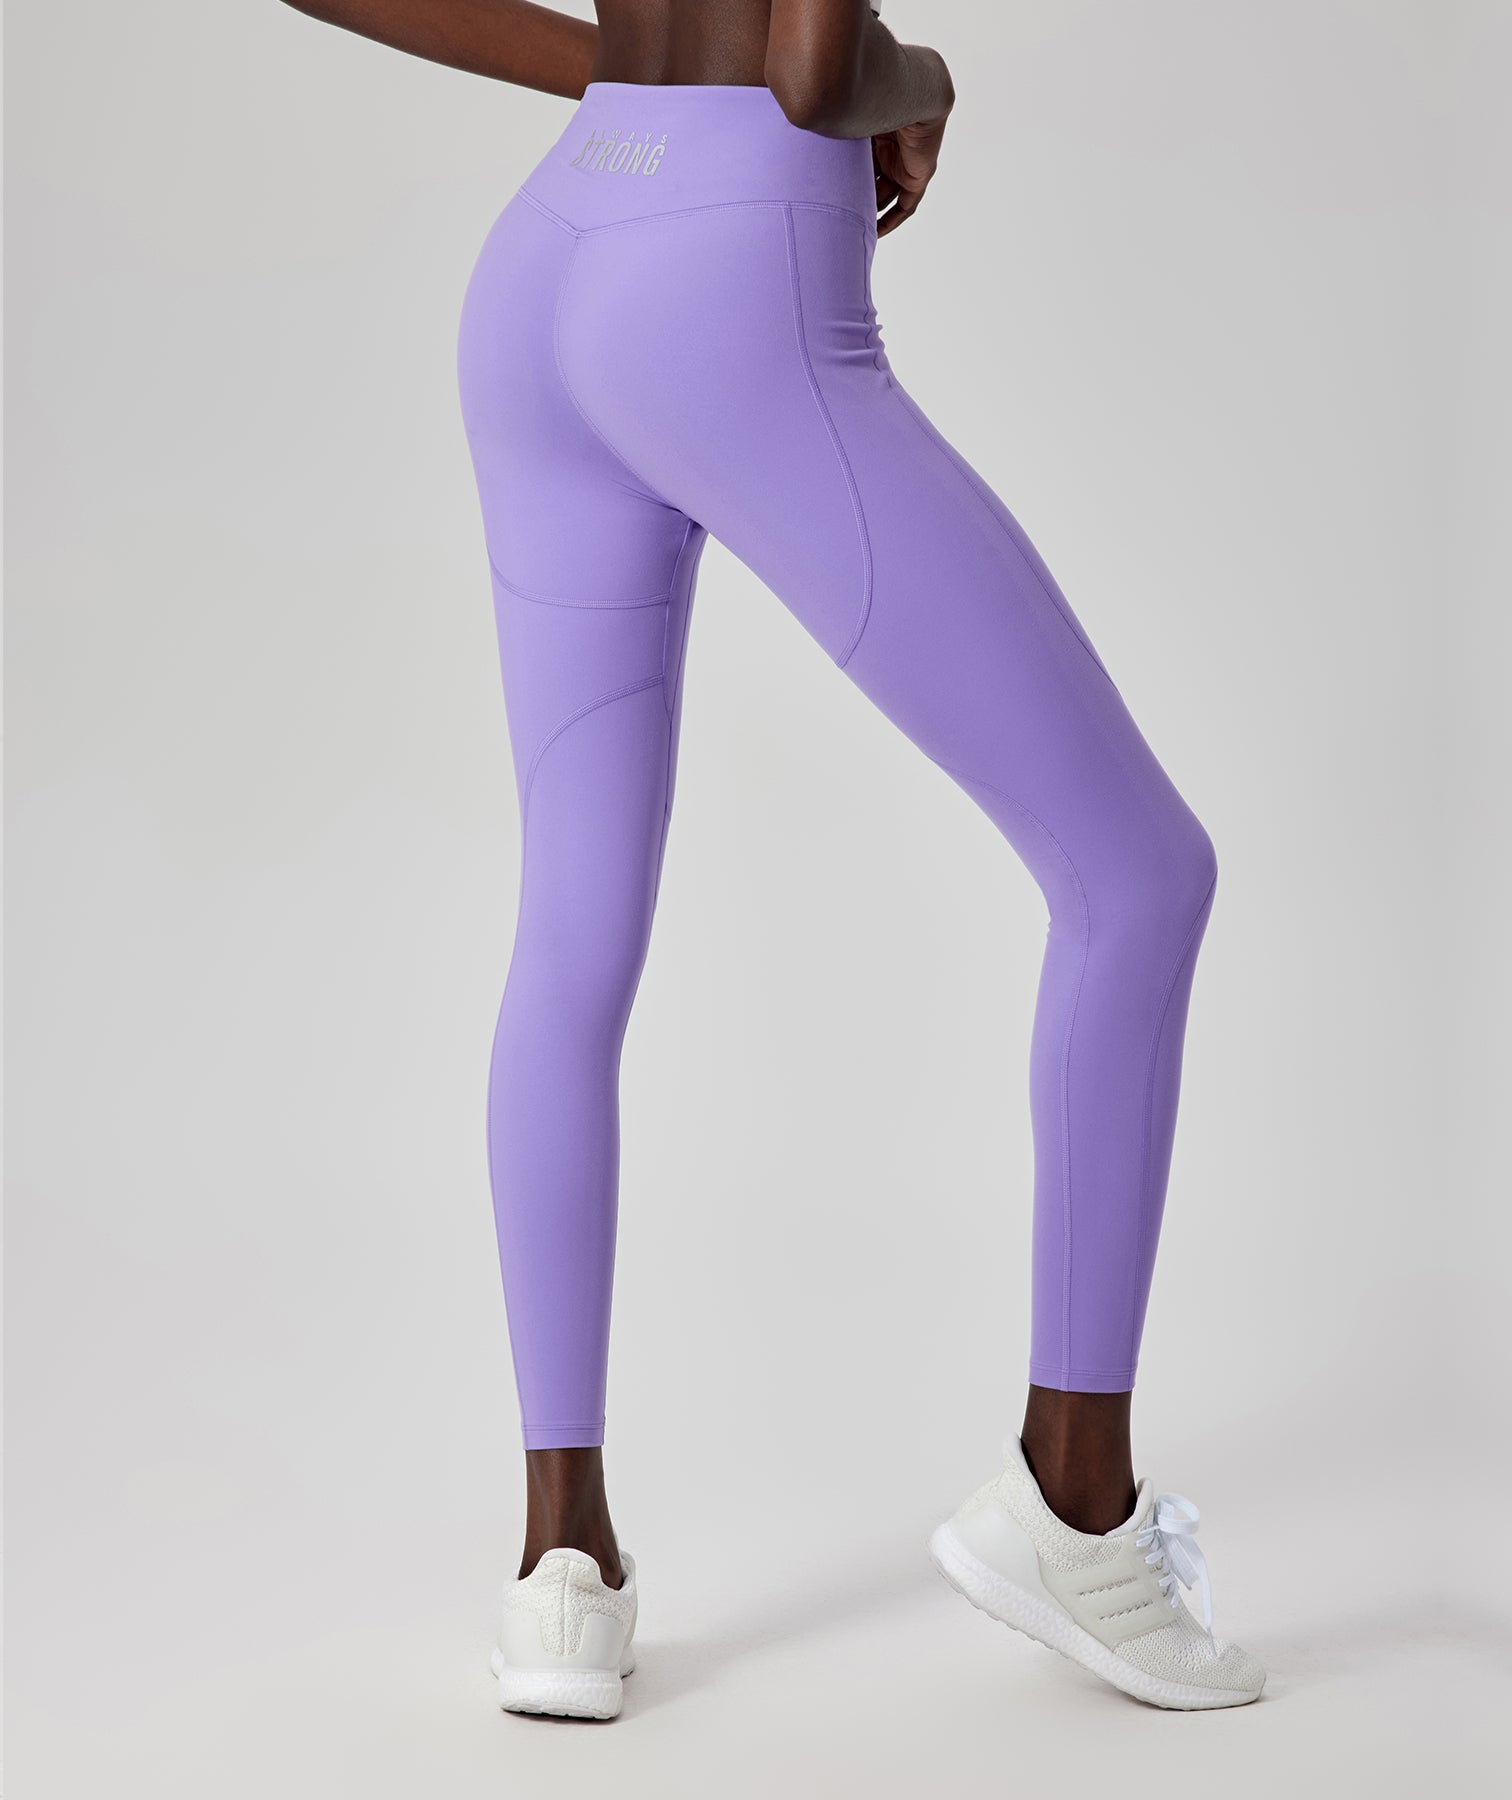 EVERLAST Womens Leggings Grey Purple UK 12 Seamless Compression